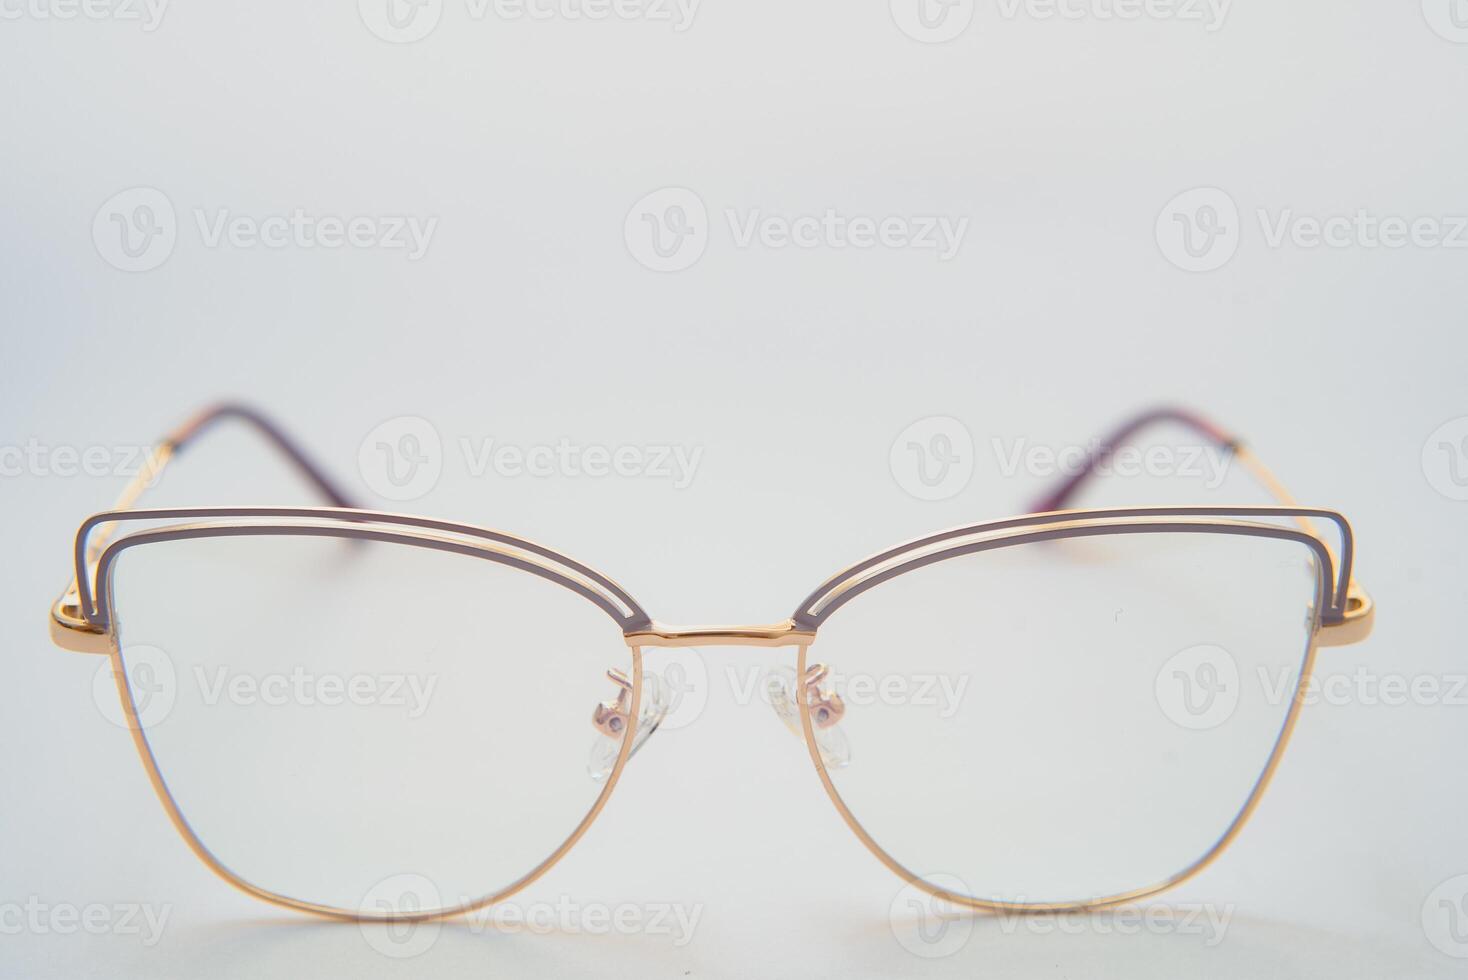 hembra los anteojos macro detalle terminado un blanco antecedentes. horizontal foto